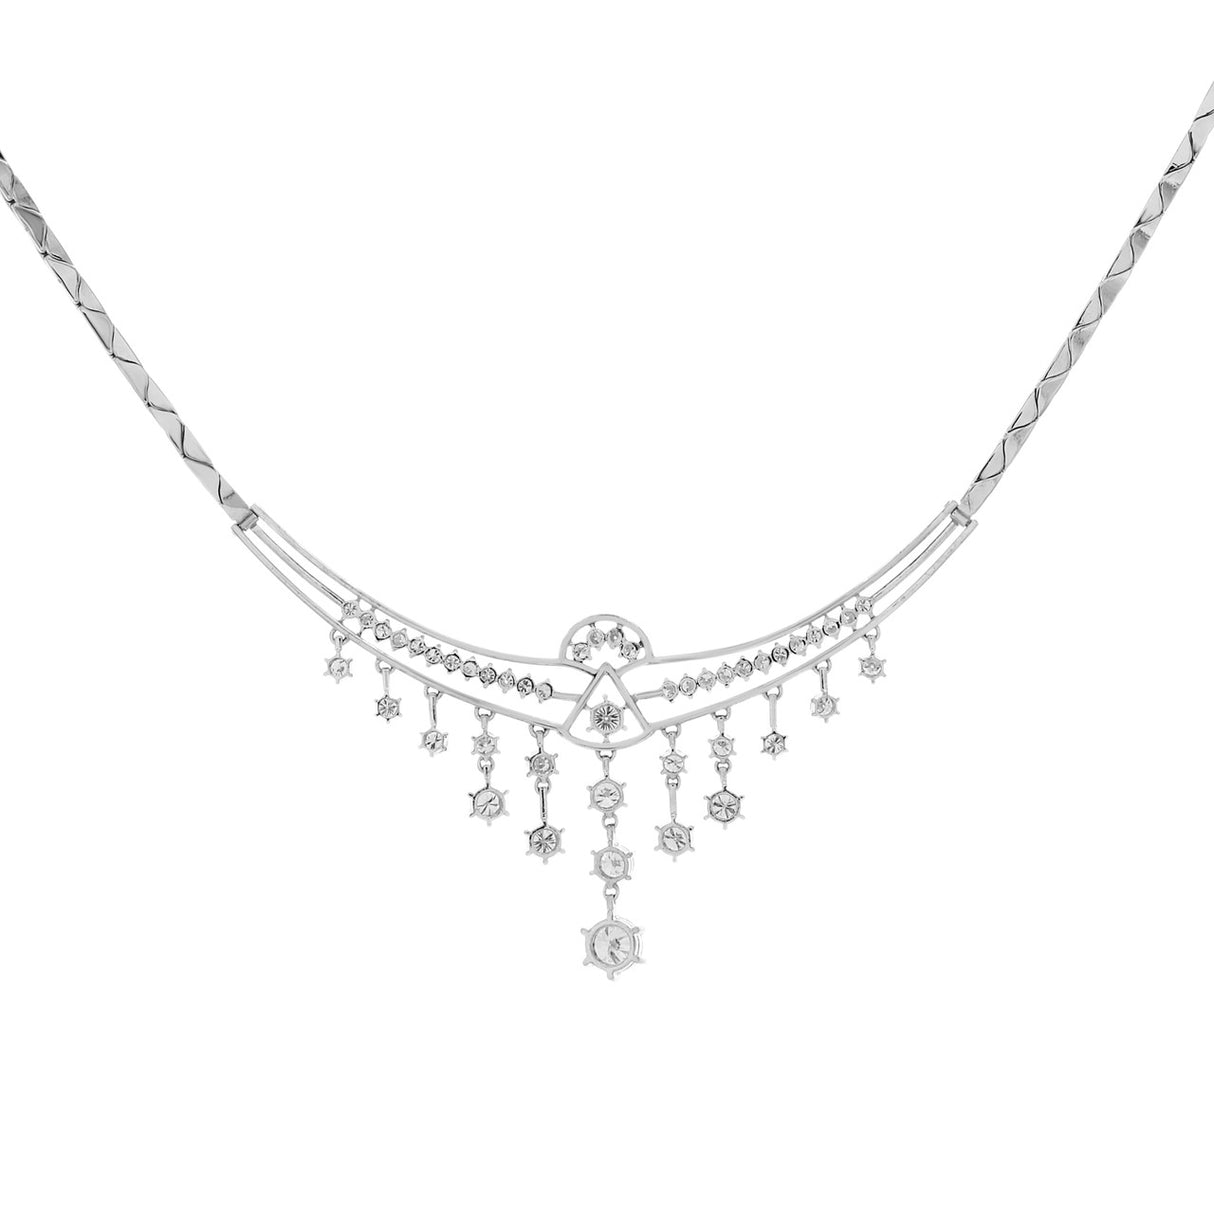 14K White Gold 3.75 Carat Diamond Lavaliere Necklace